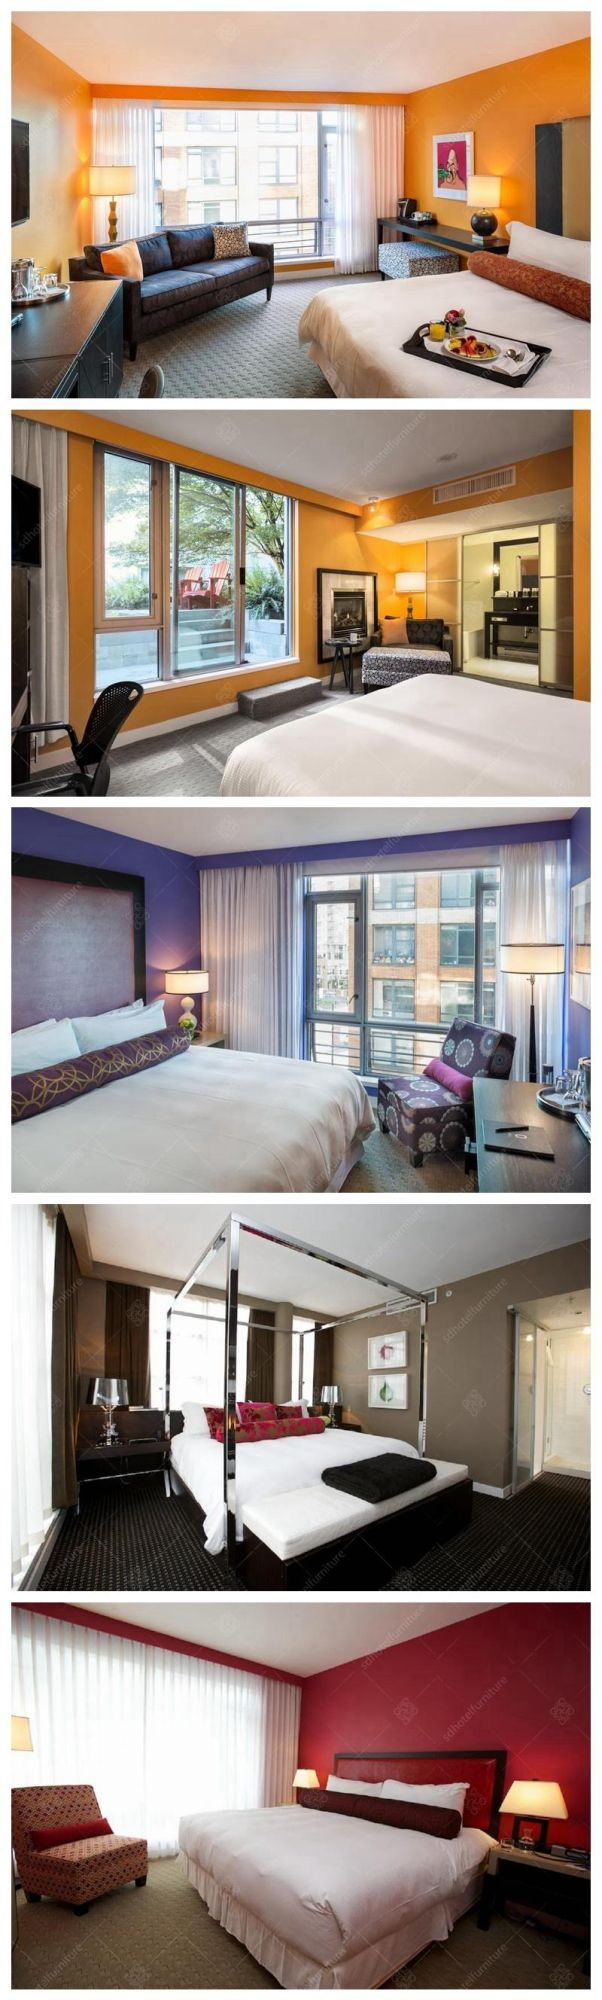 Artistic Luxury Modern Hotel King Size Bedroom Furniture Sets